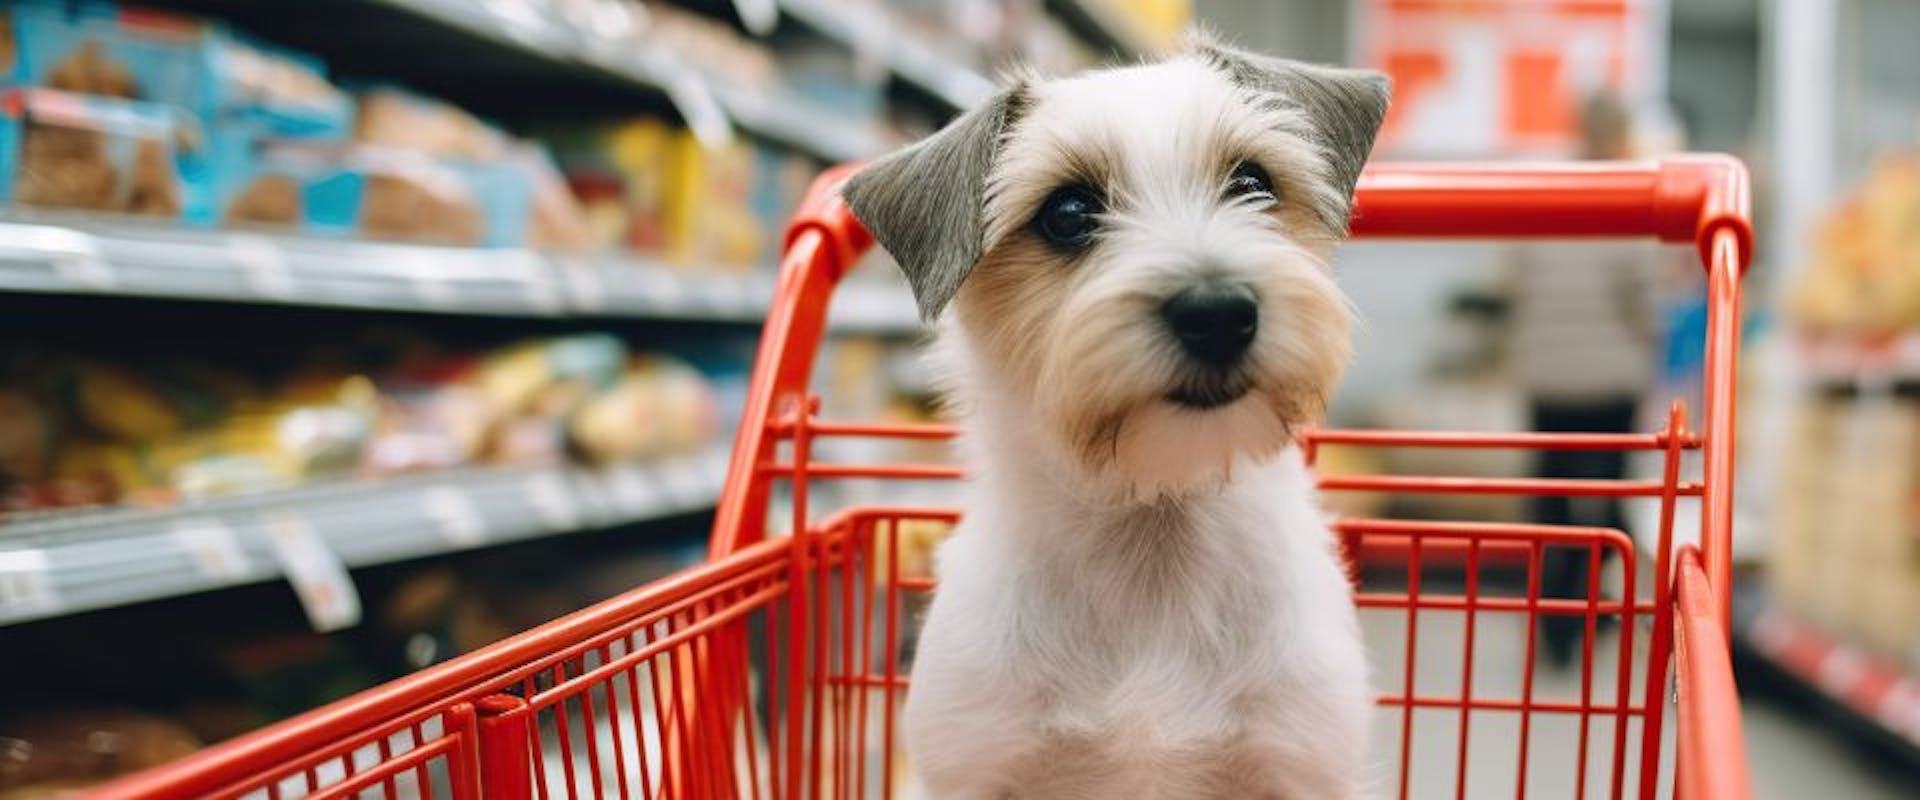 Dog sat in shopping trolley